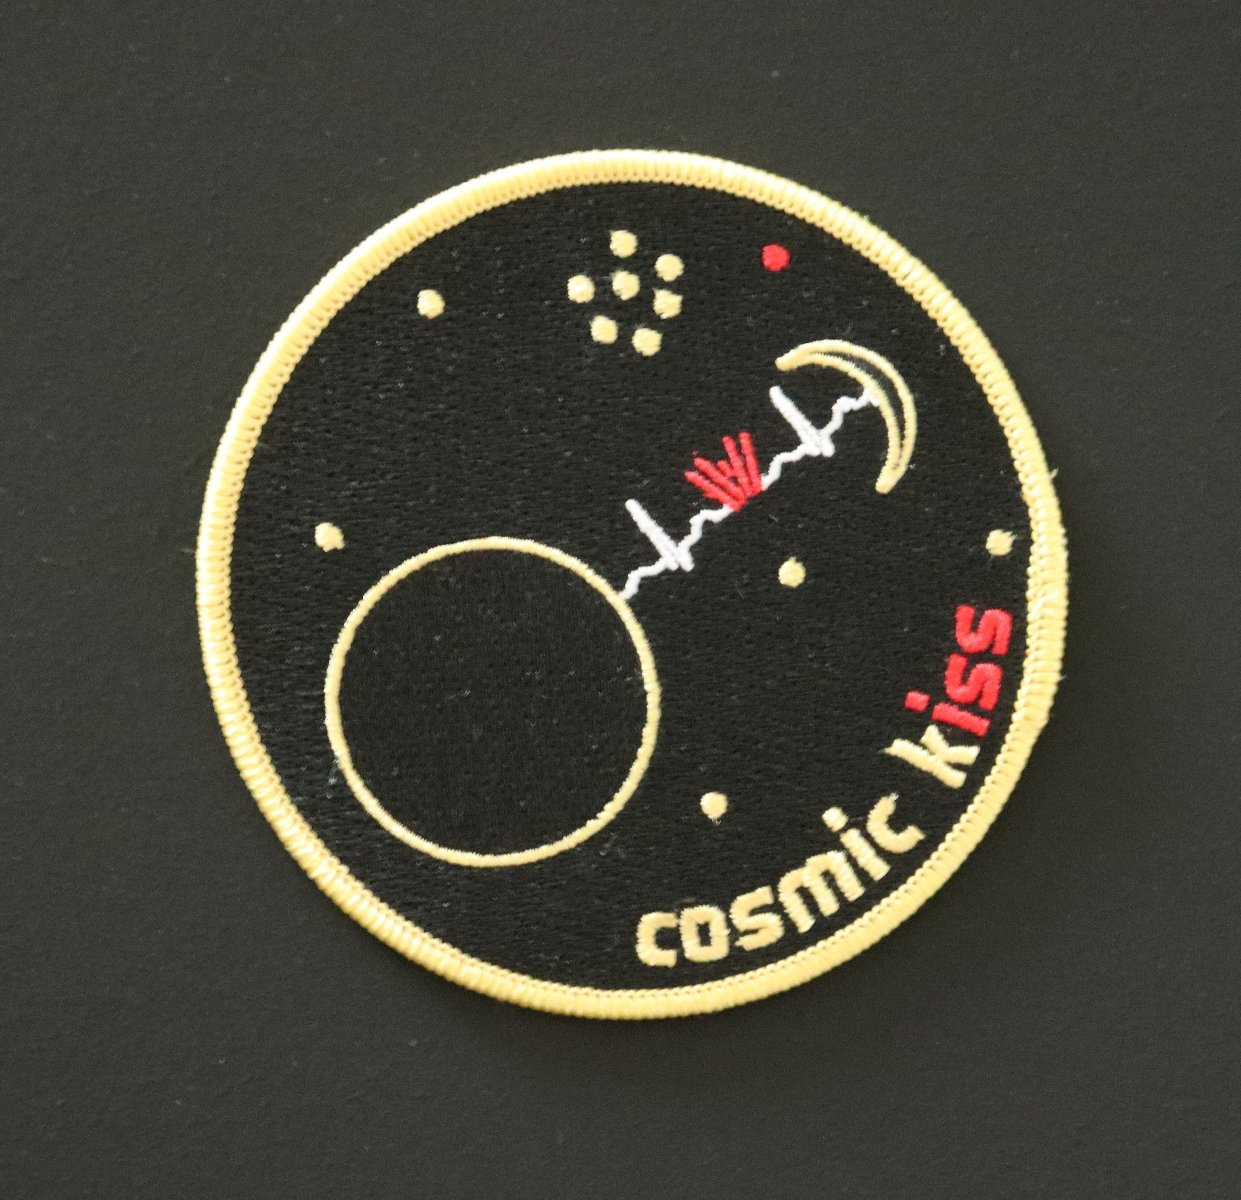 Missionpatch der Mission Cosmic Kiss (Sammlung Luftfahrt.Industrie.Westfalen | Moritz-Adolf Trappe CC BY-NC-SA)